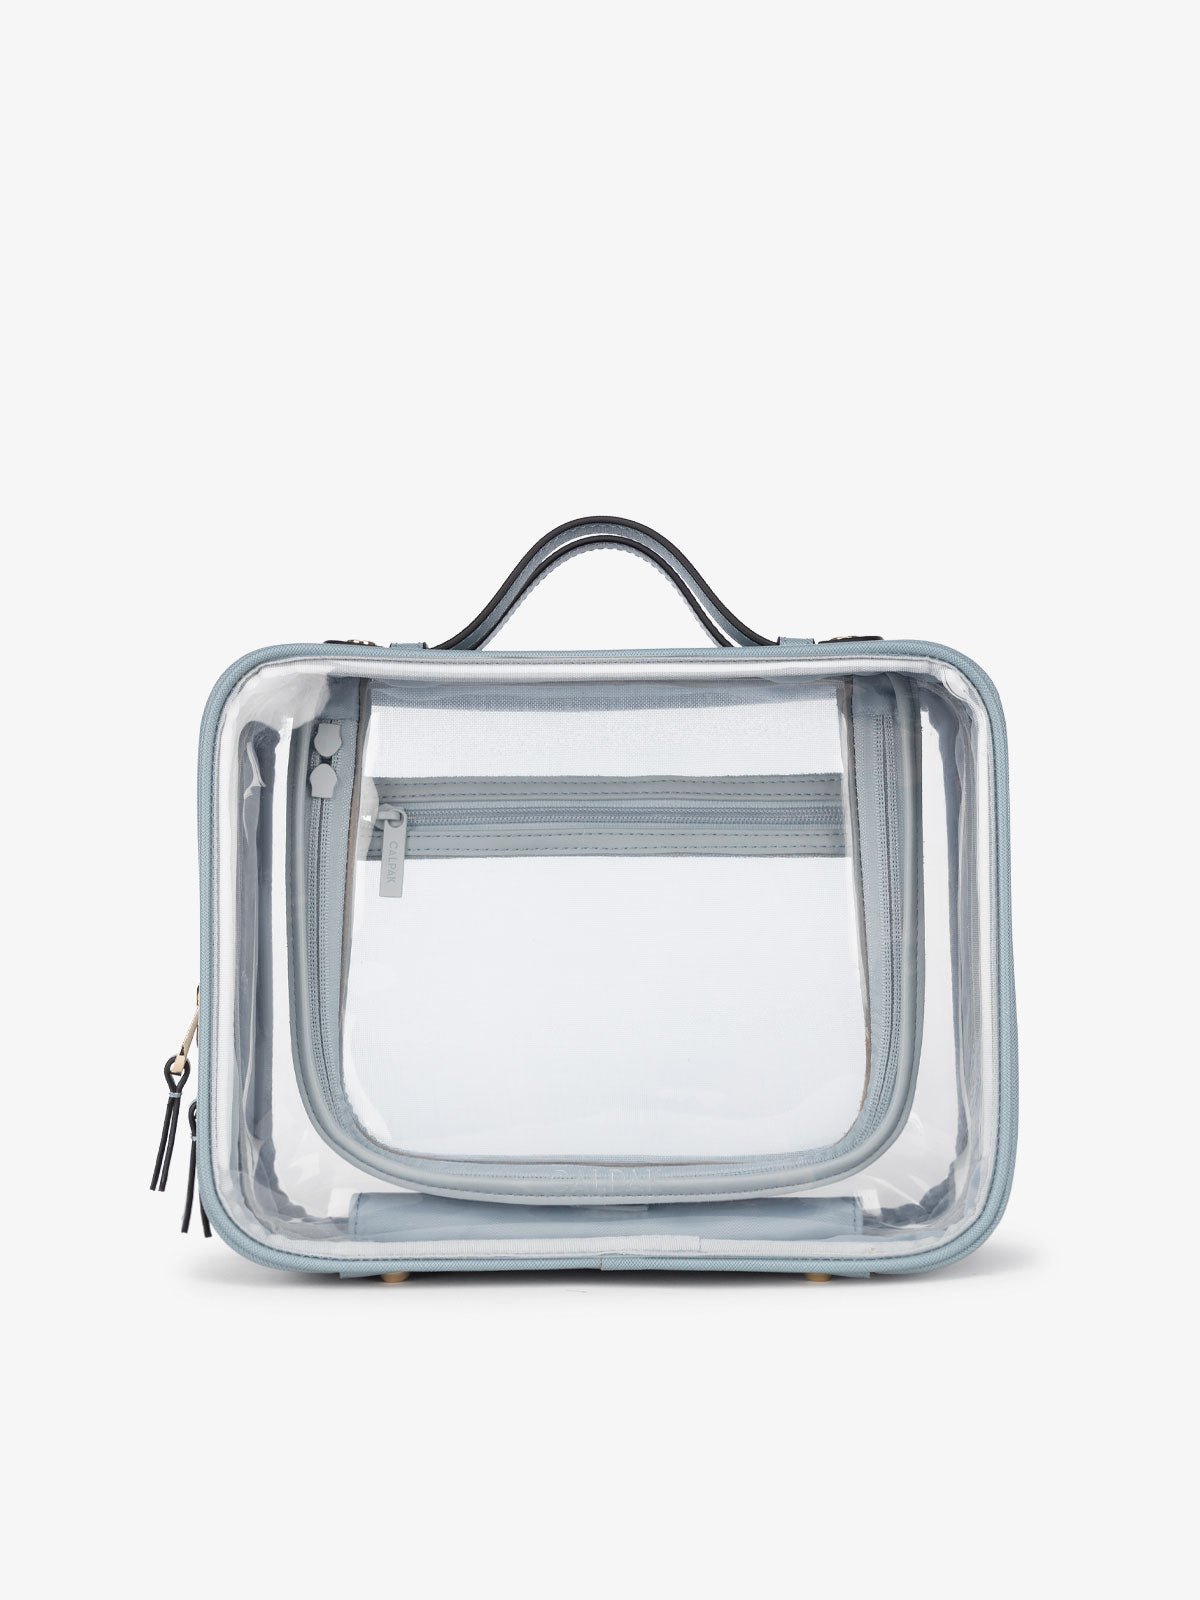 CALPAK large transparent travel makeup bag with handle in blue